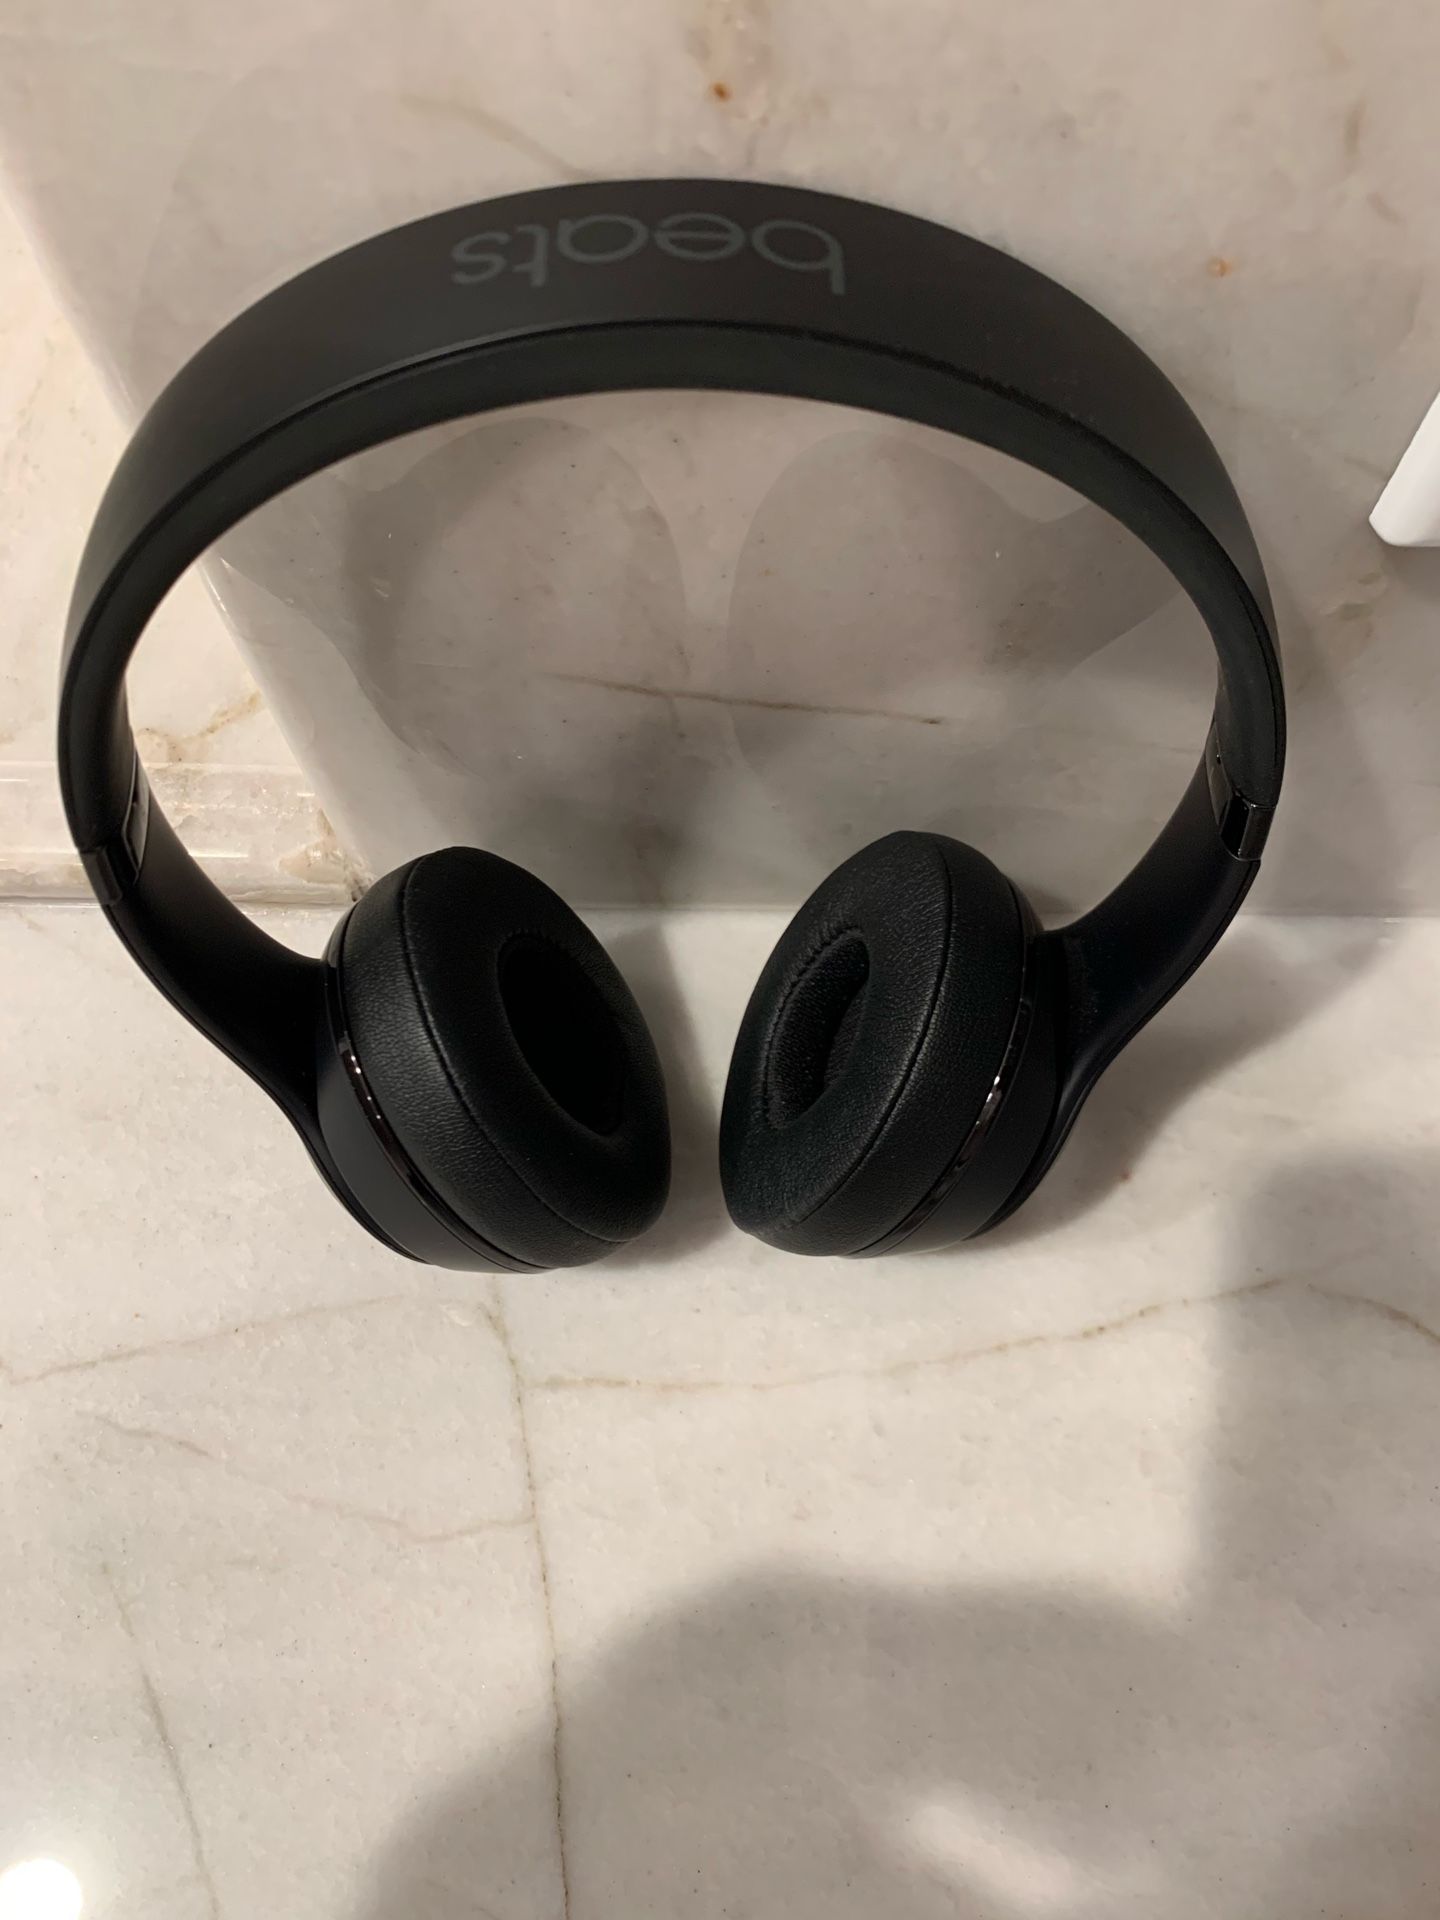 New Beats Solo 3 Wireless Headphones- Black